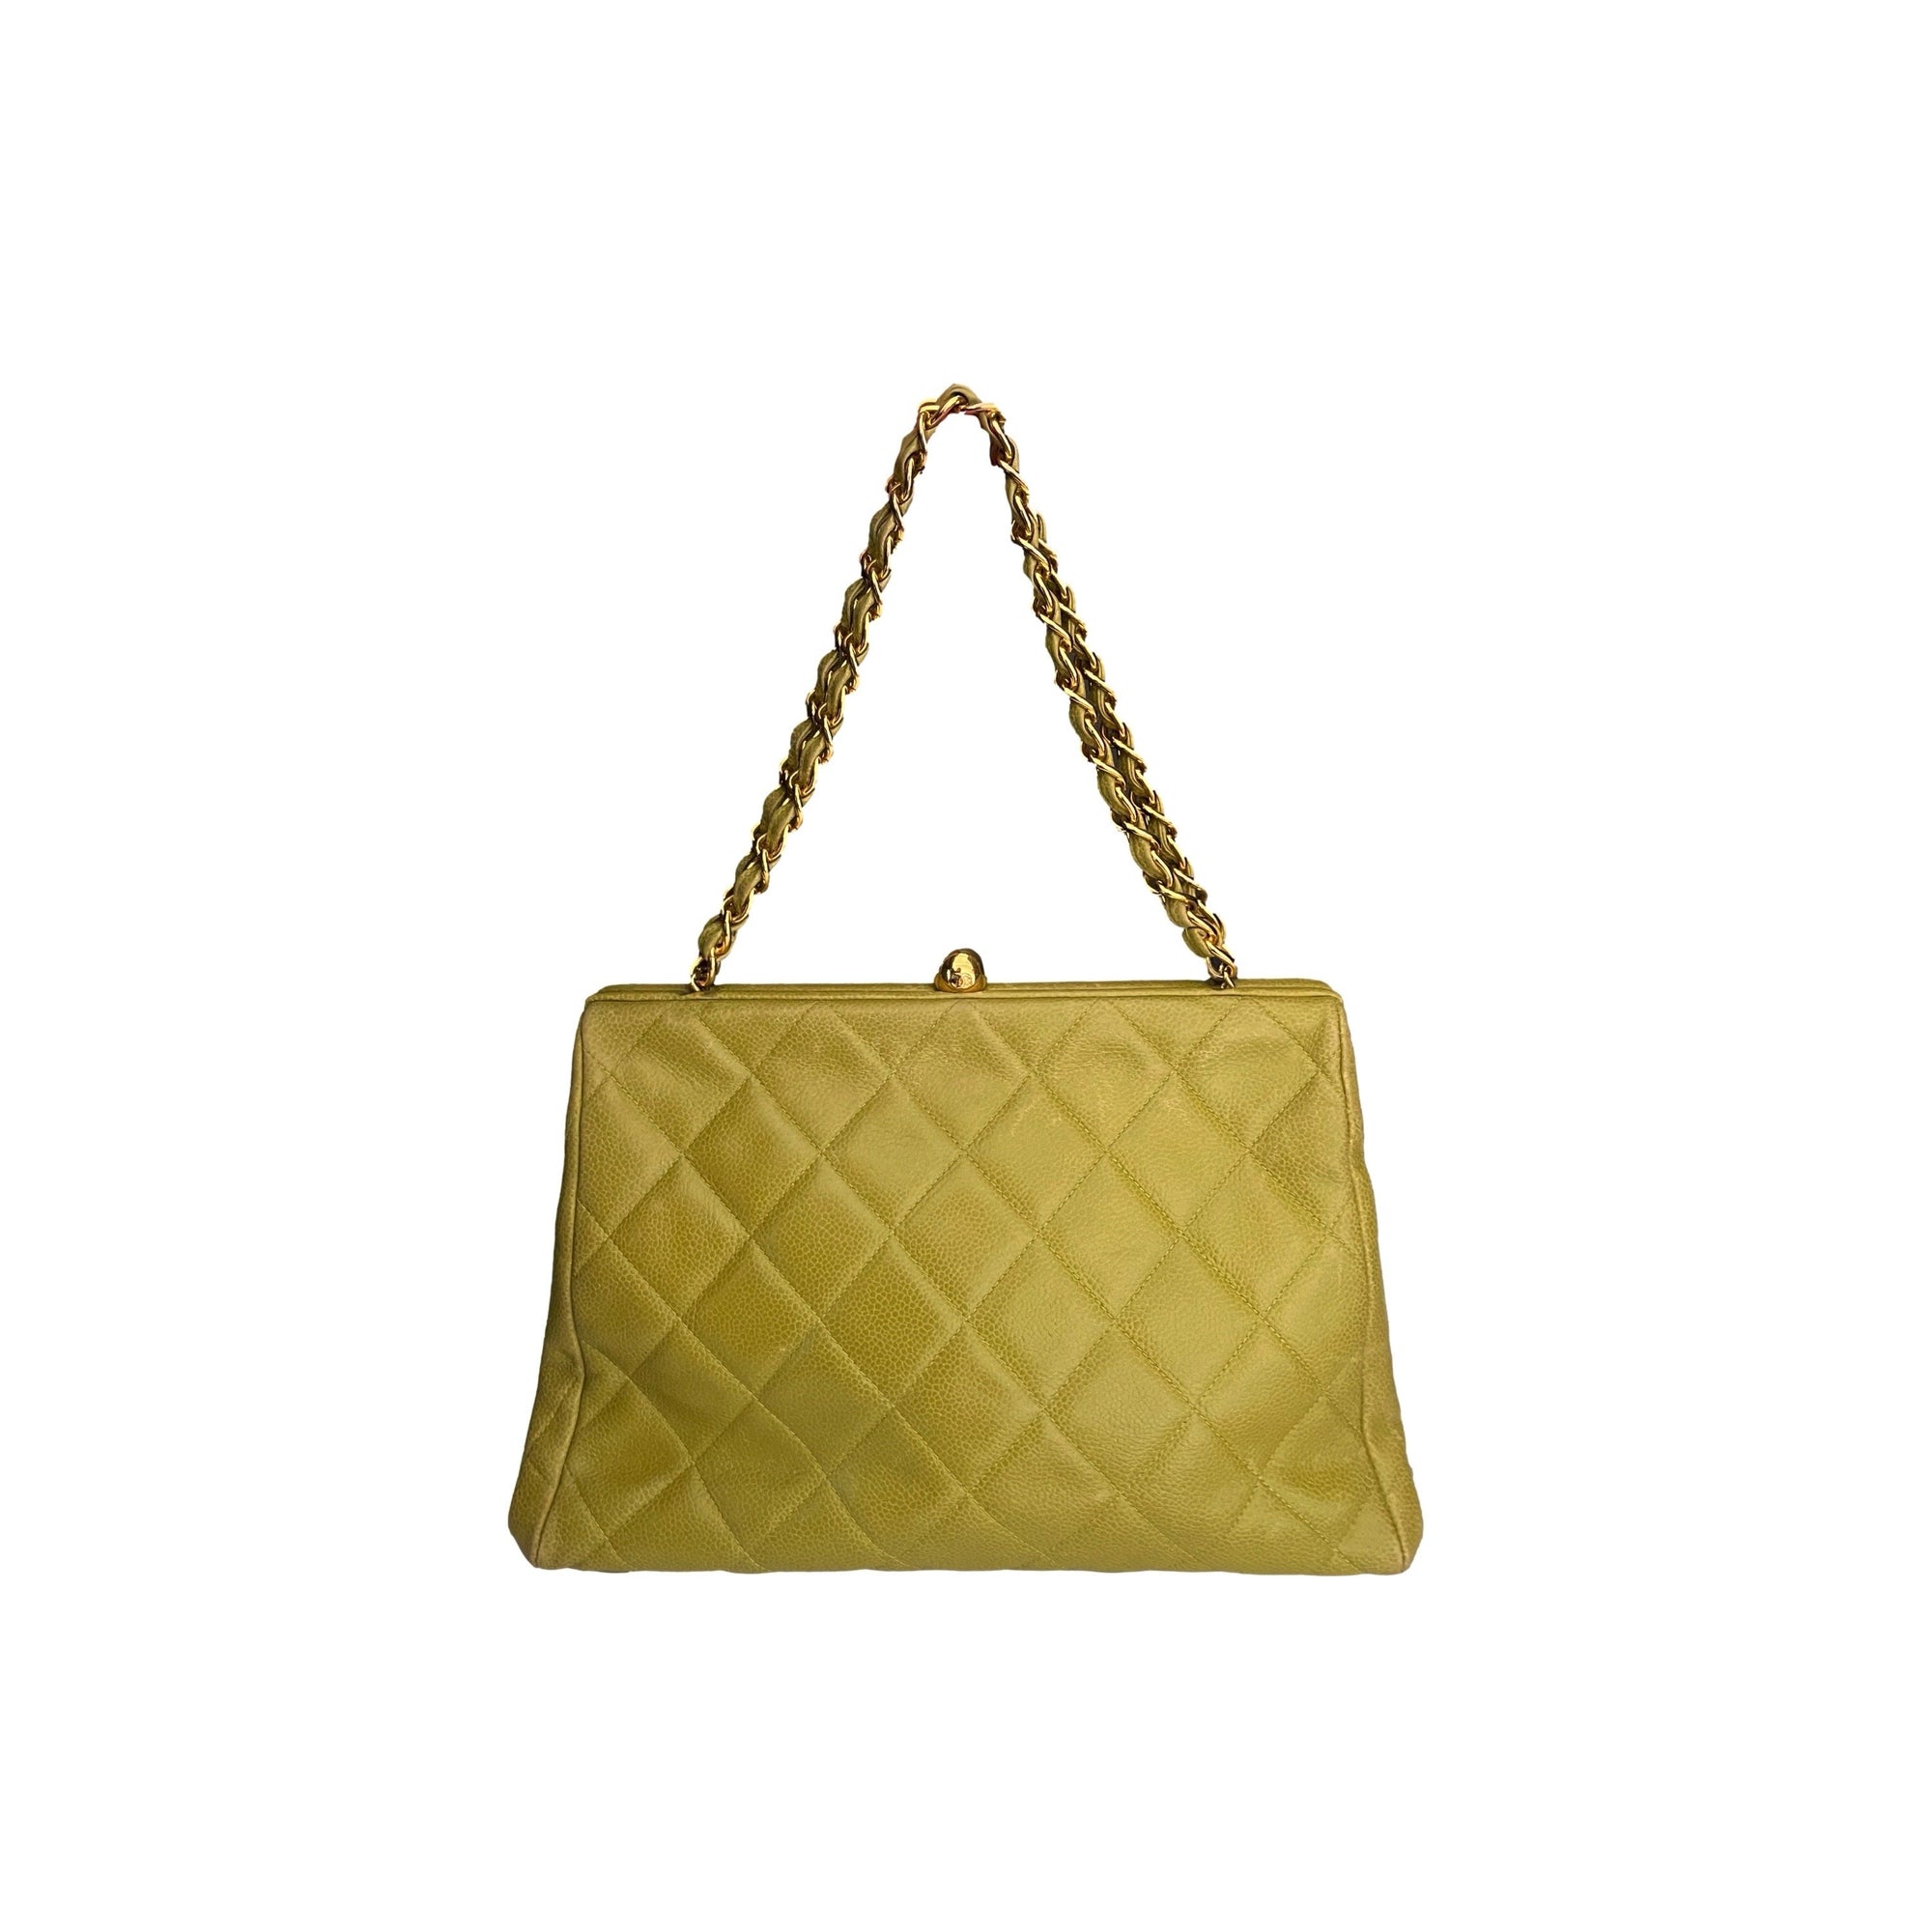 Chanel Lime Green Quilted Shoulder Bag - Handbags